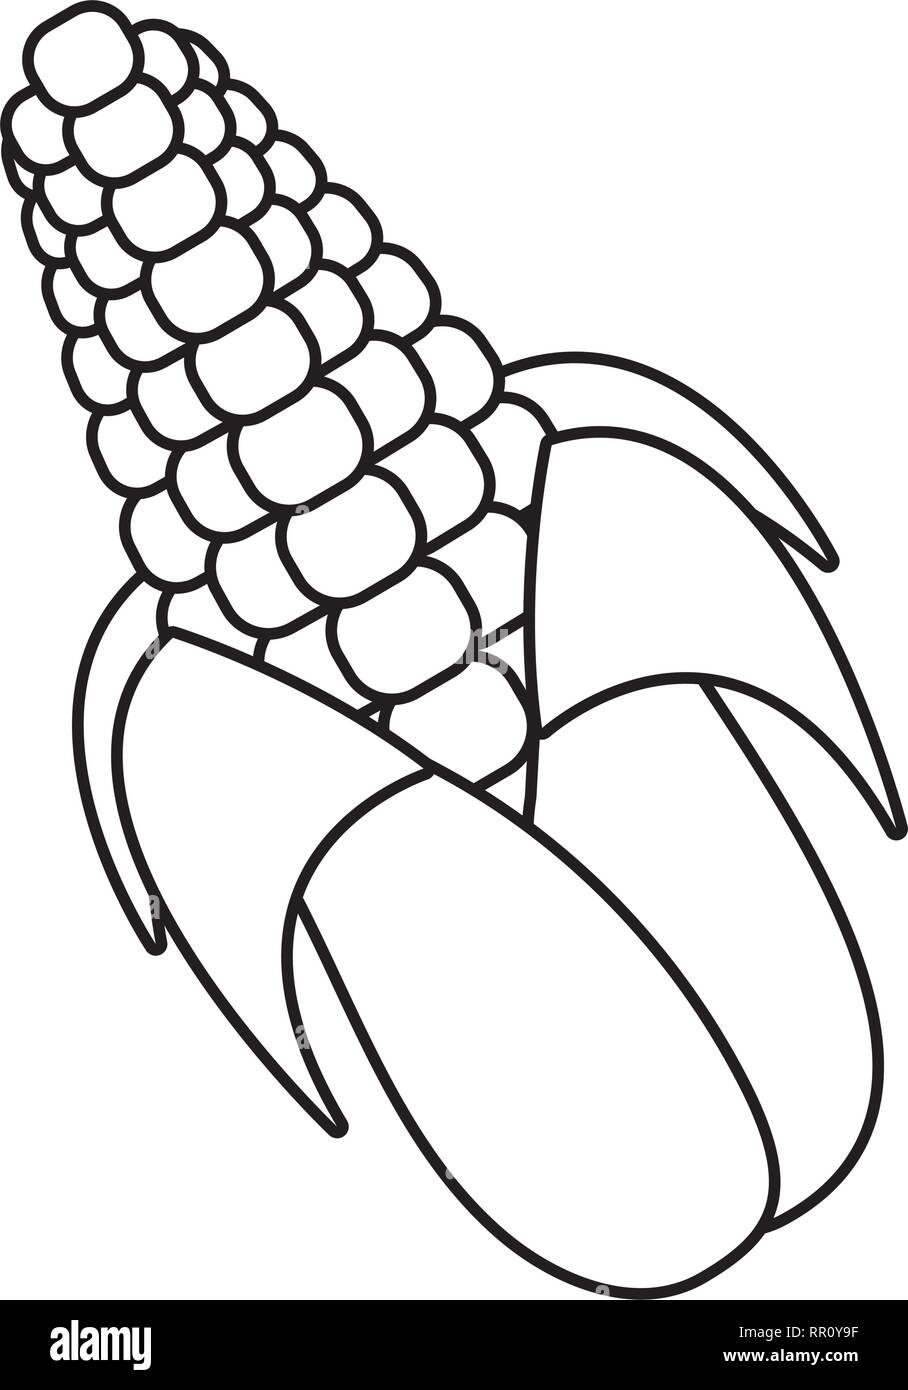 Corn cartoon Black and White Stock Photos & Images - Alamy